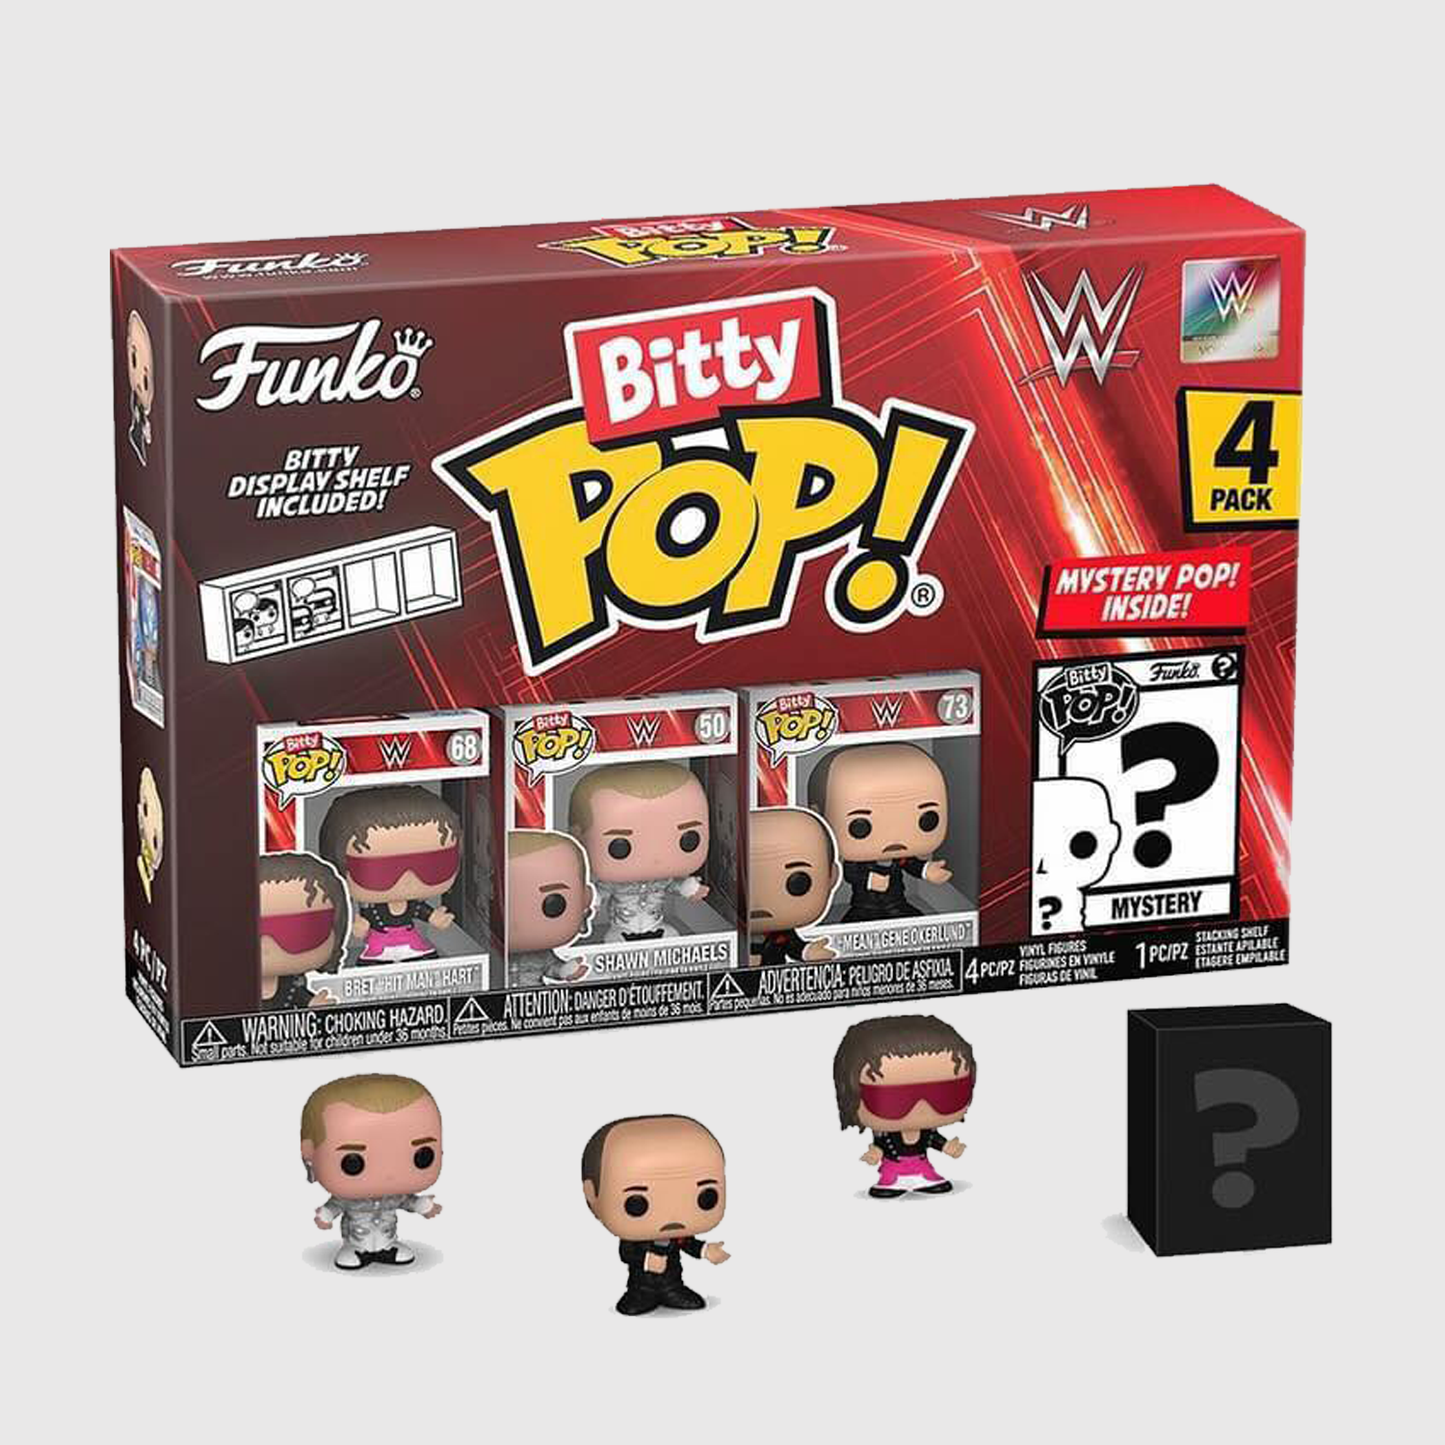 (PRE-ORDER) Funko Bitty POP! WWE: Bret Hart 4-Pack